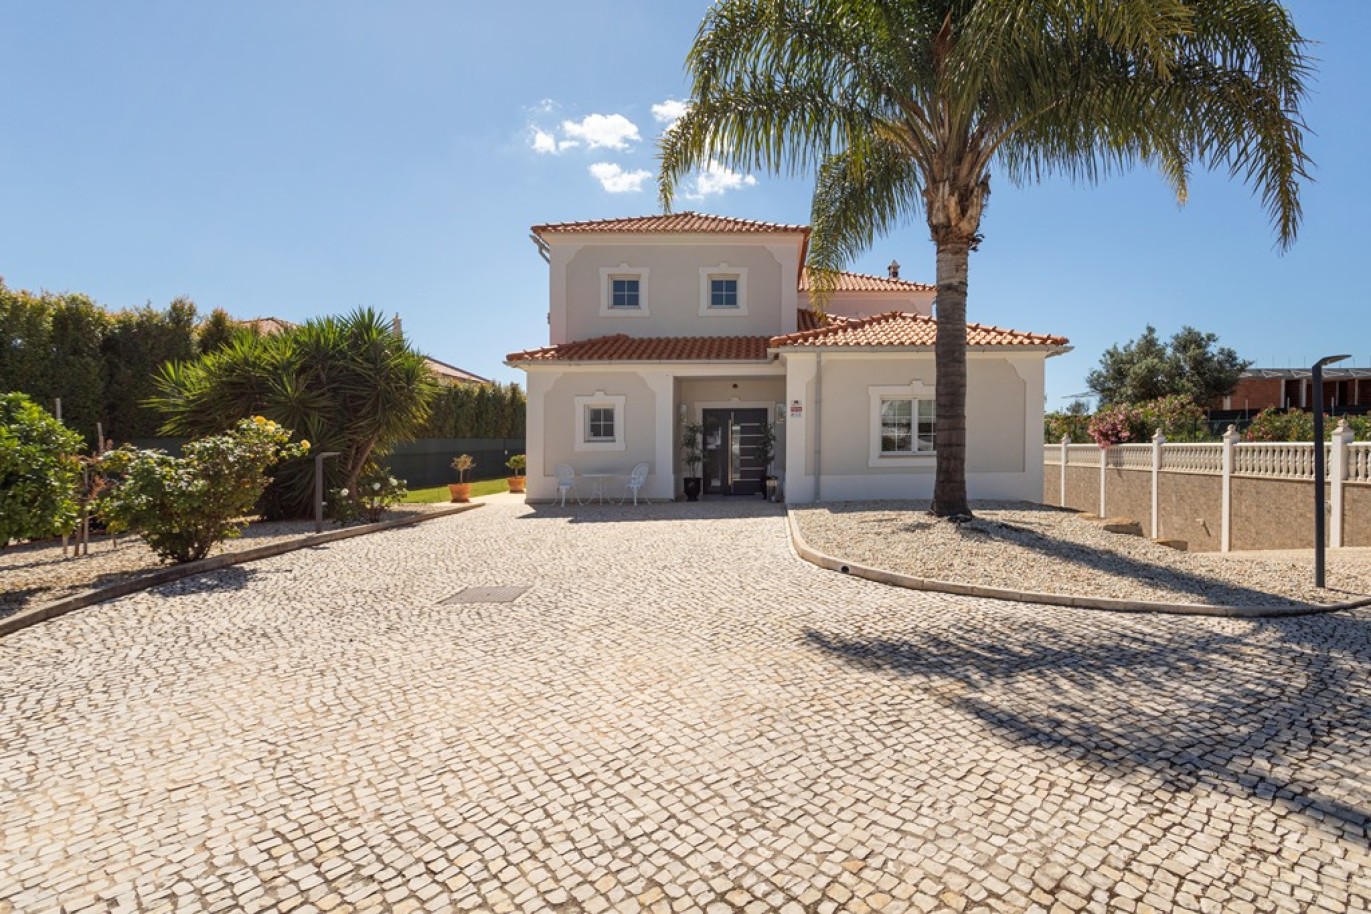 Moradia V5 com piscina, para venda em Vilamoura, Algarve_264465